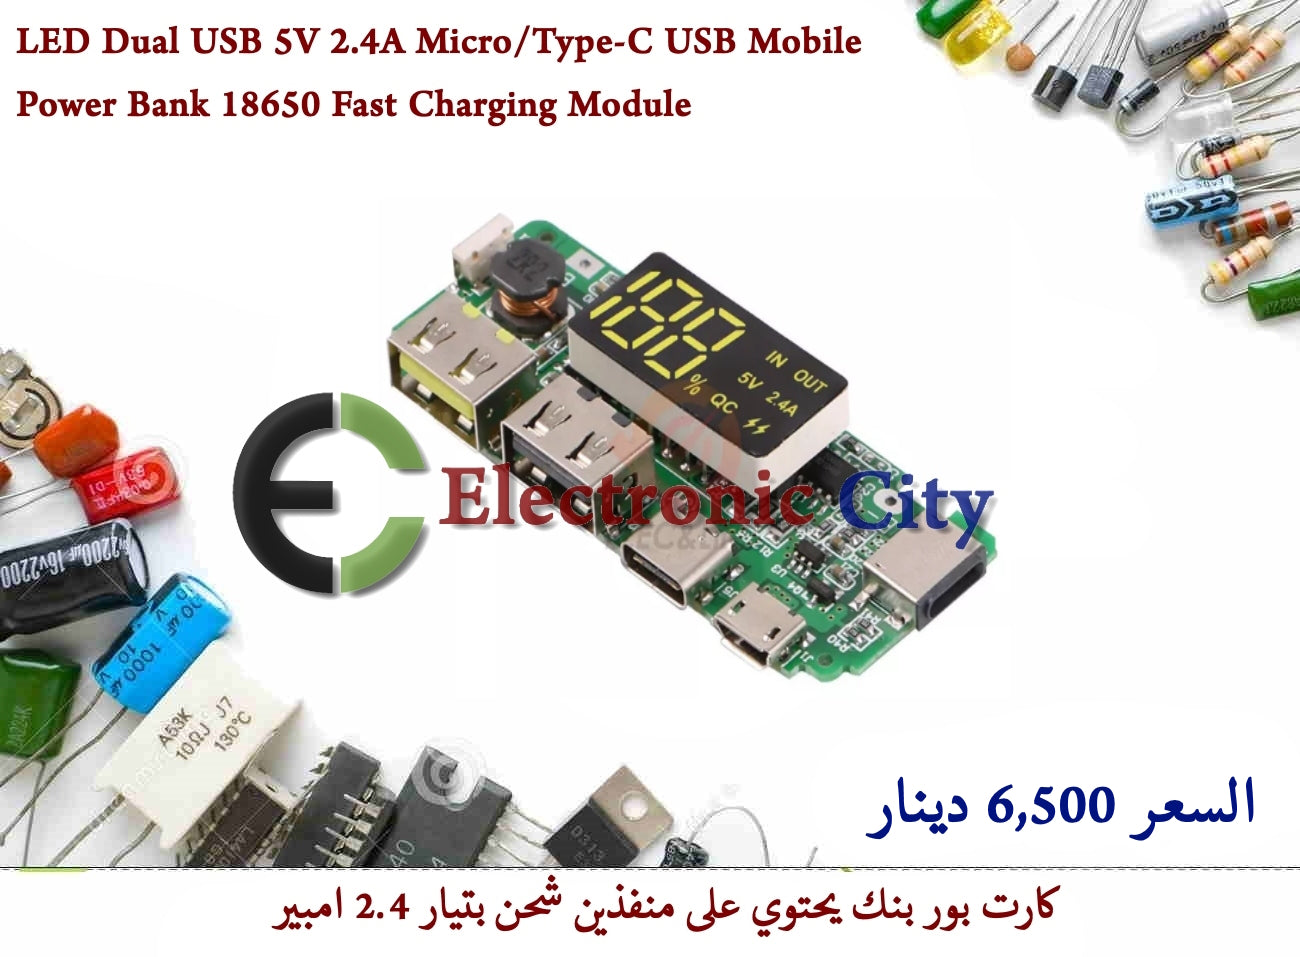 LED Dual USB 5V 2.4A Micro-Type-C USB Mobile Power Bank 18650 Charging Module #G3 X13582